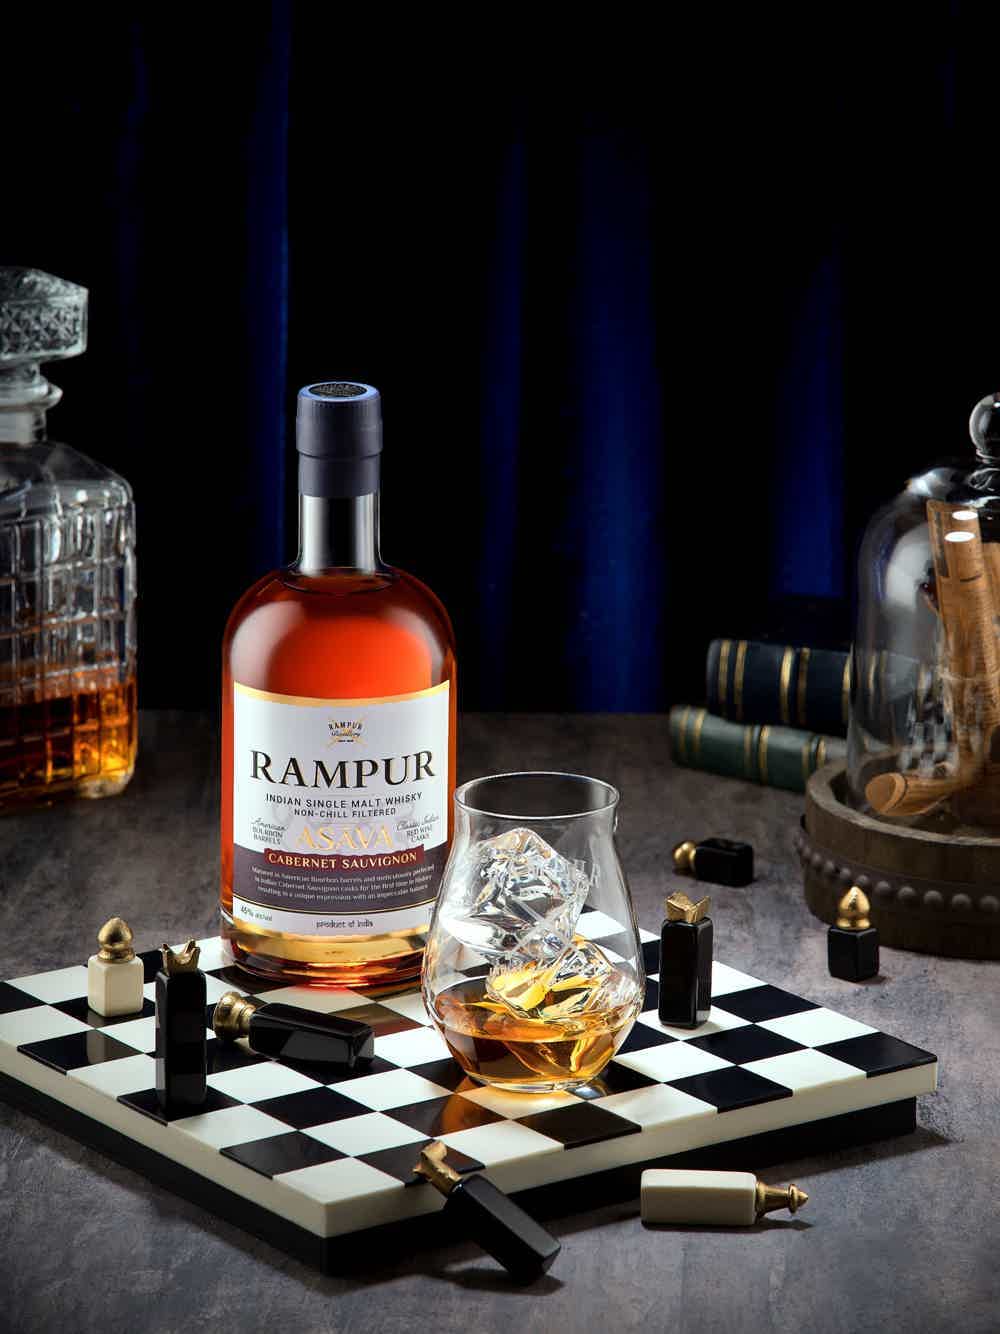 Rampur ASAVA Indian Single Malt Whisky 45.0% 0.7L, Spirits